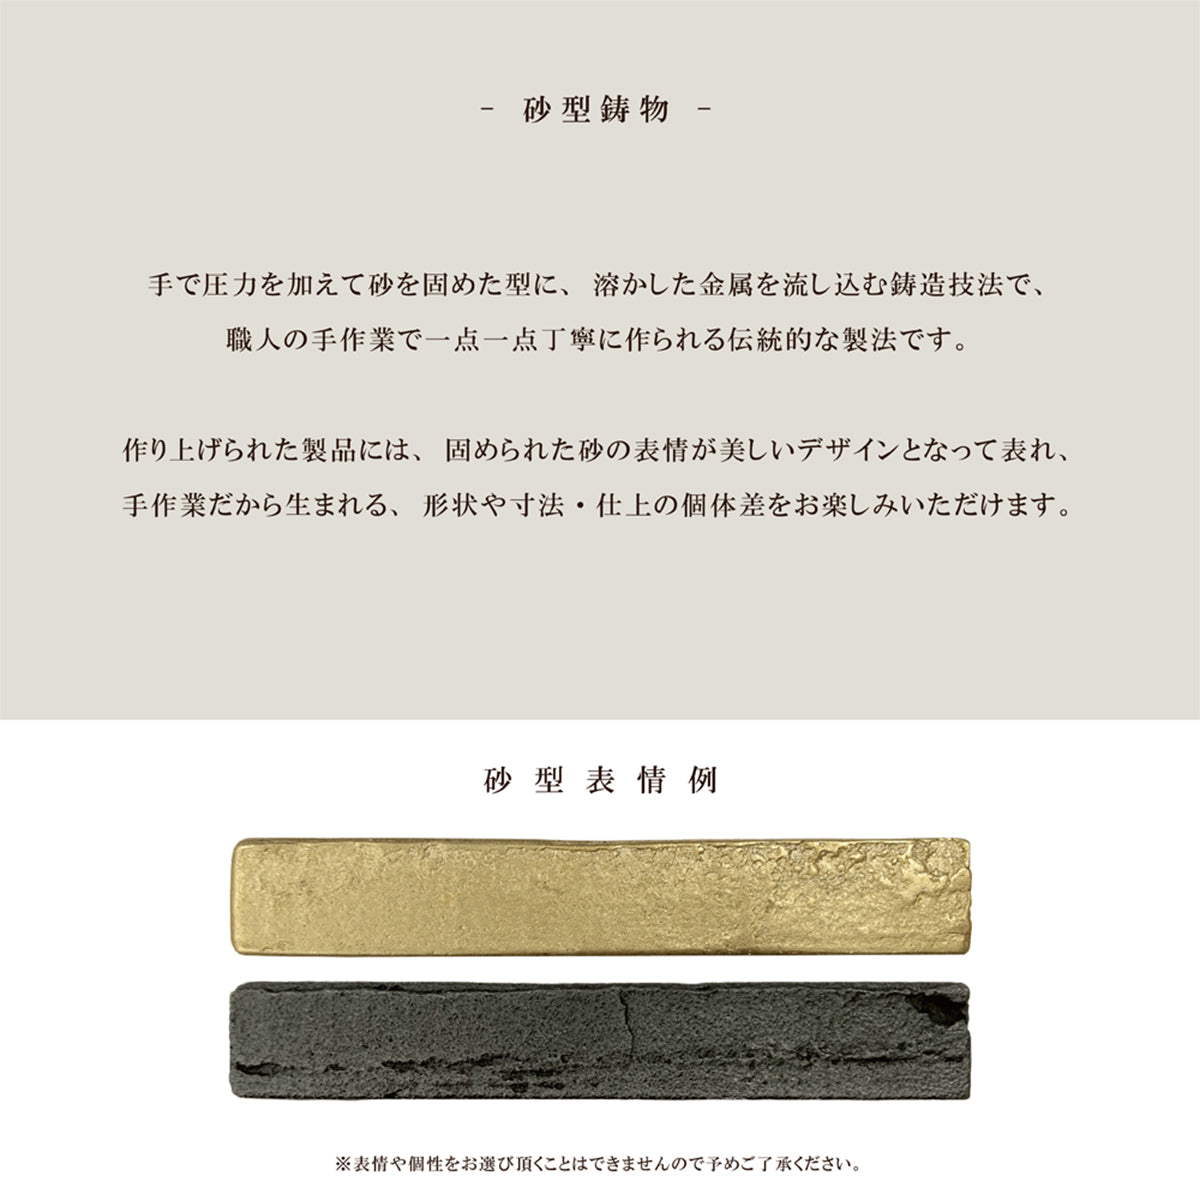 Brass Casting 真鍮鋳物 タオル掛け (C型 黒染め BT-210)